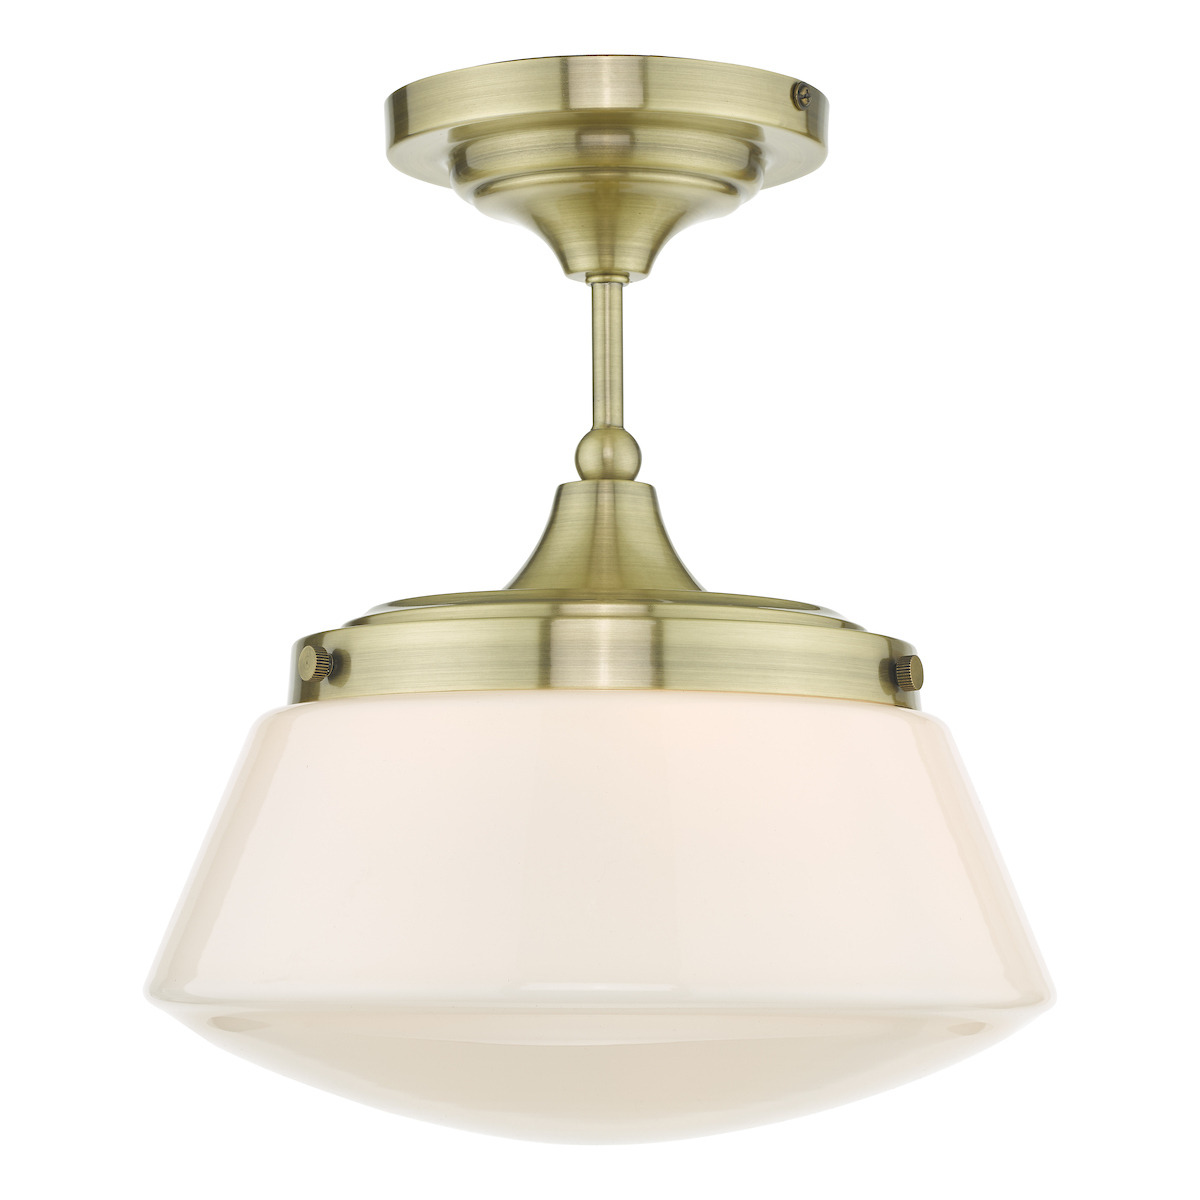 Dar Lighting CAD0175 Caden Bathroom Semi Flush Ceiling Light In Antique Brass With Opal Glass IP44